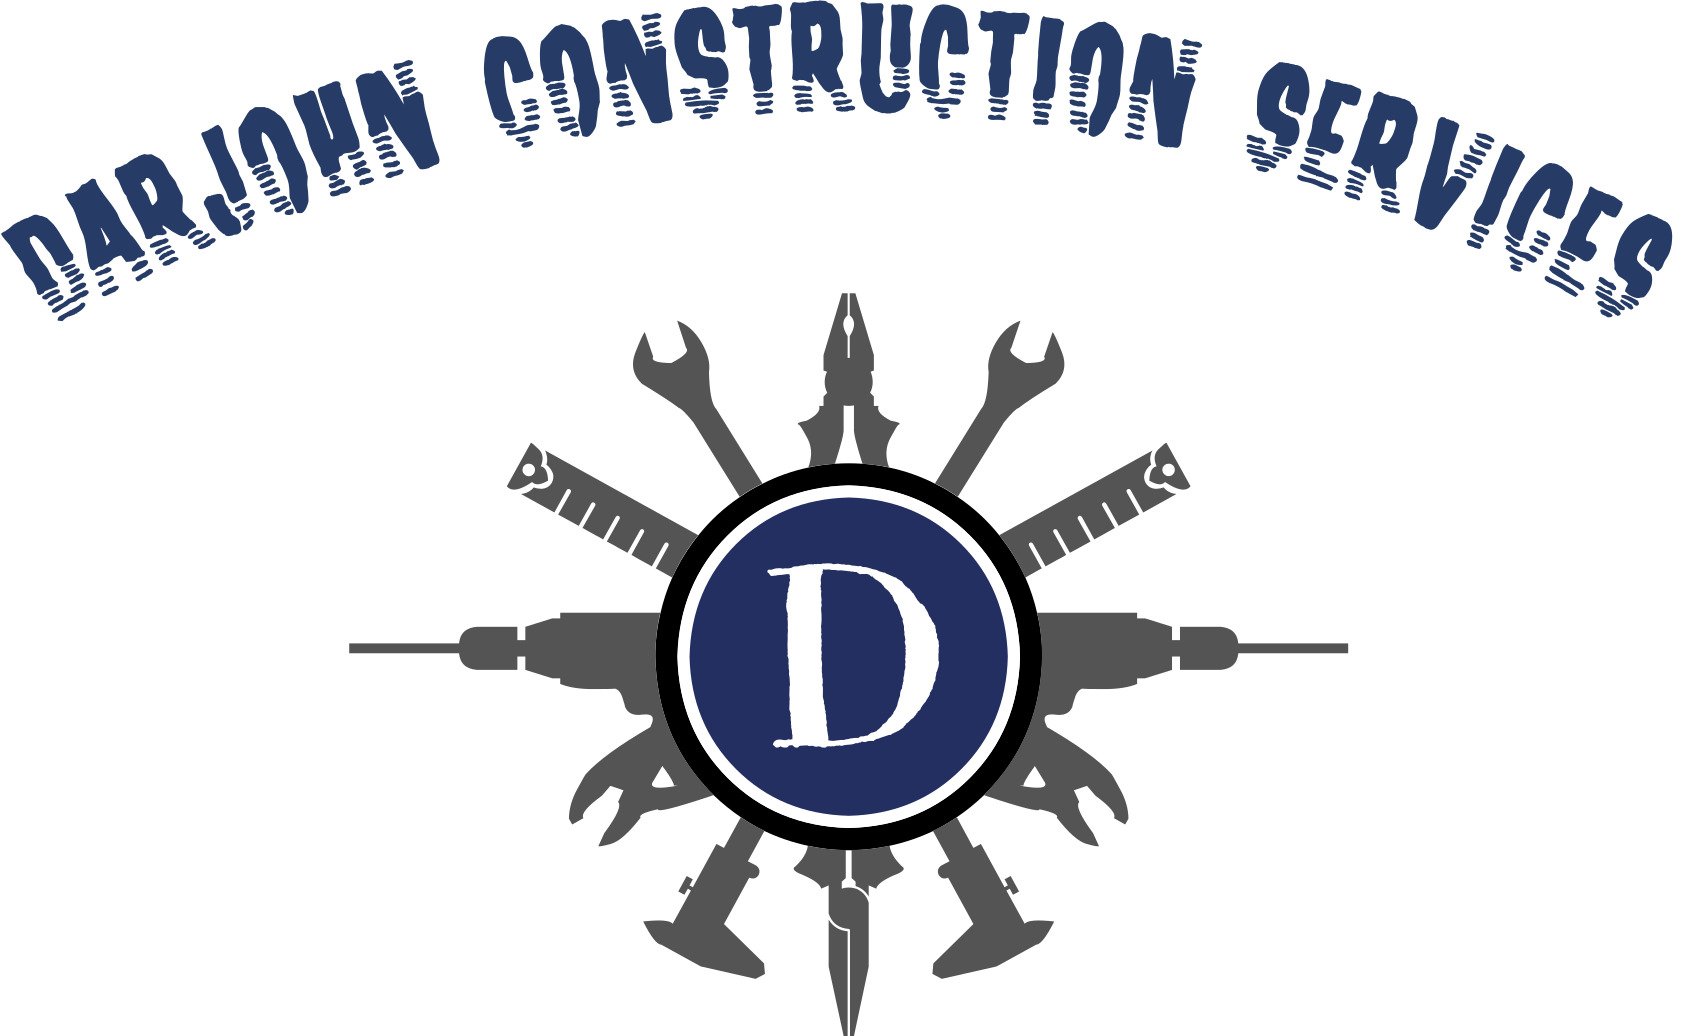 DarJohn Construction Services LLC